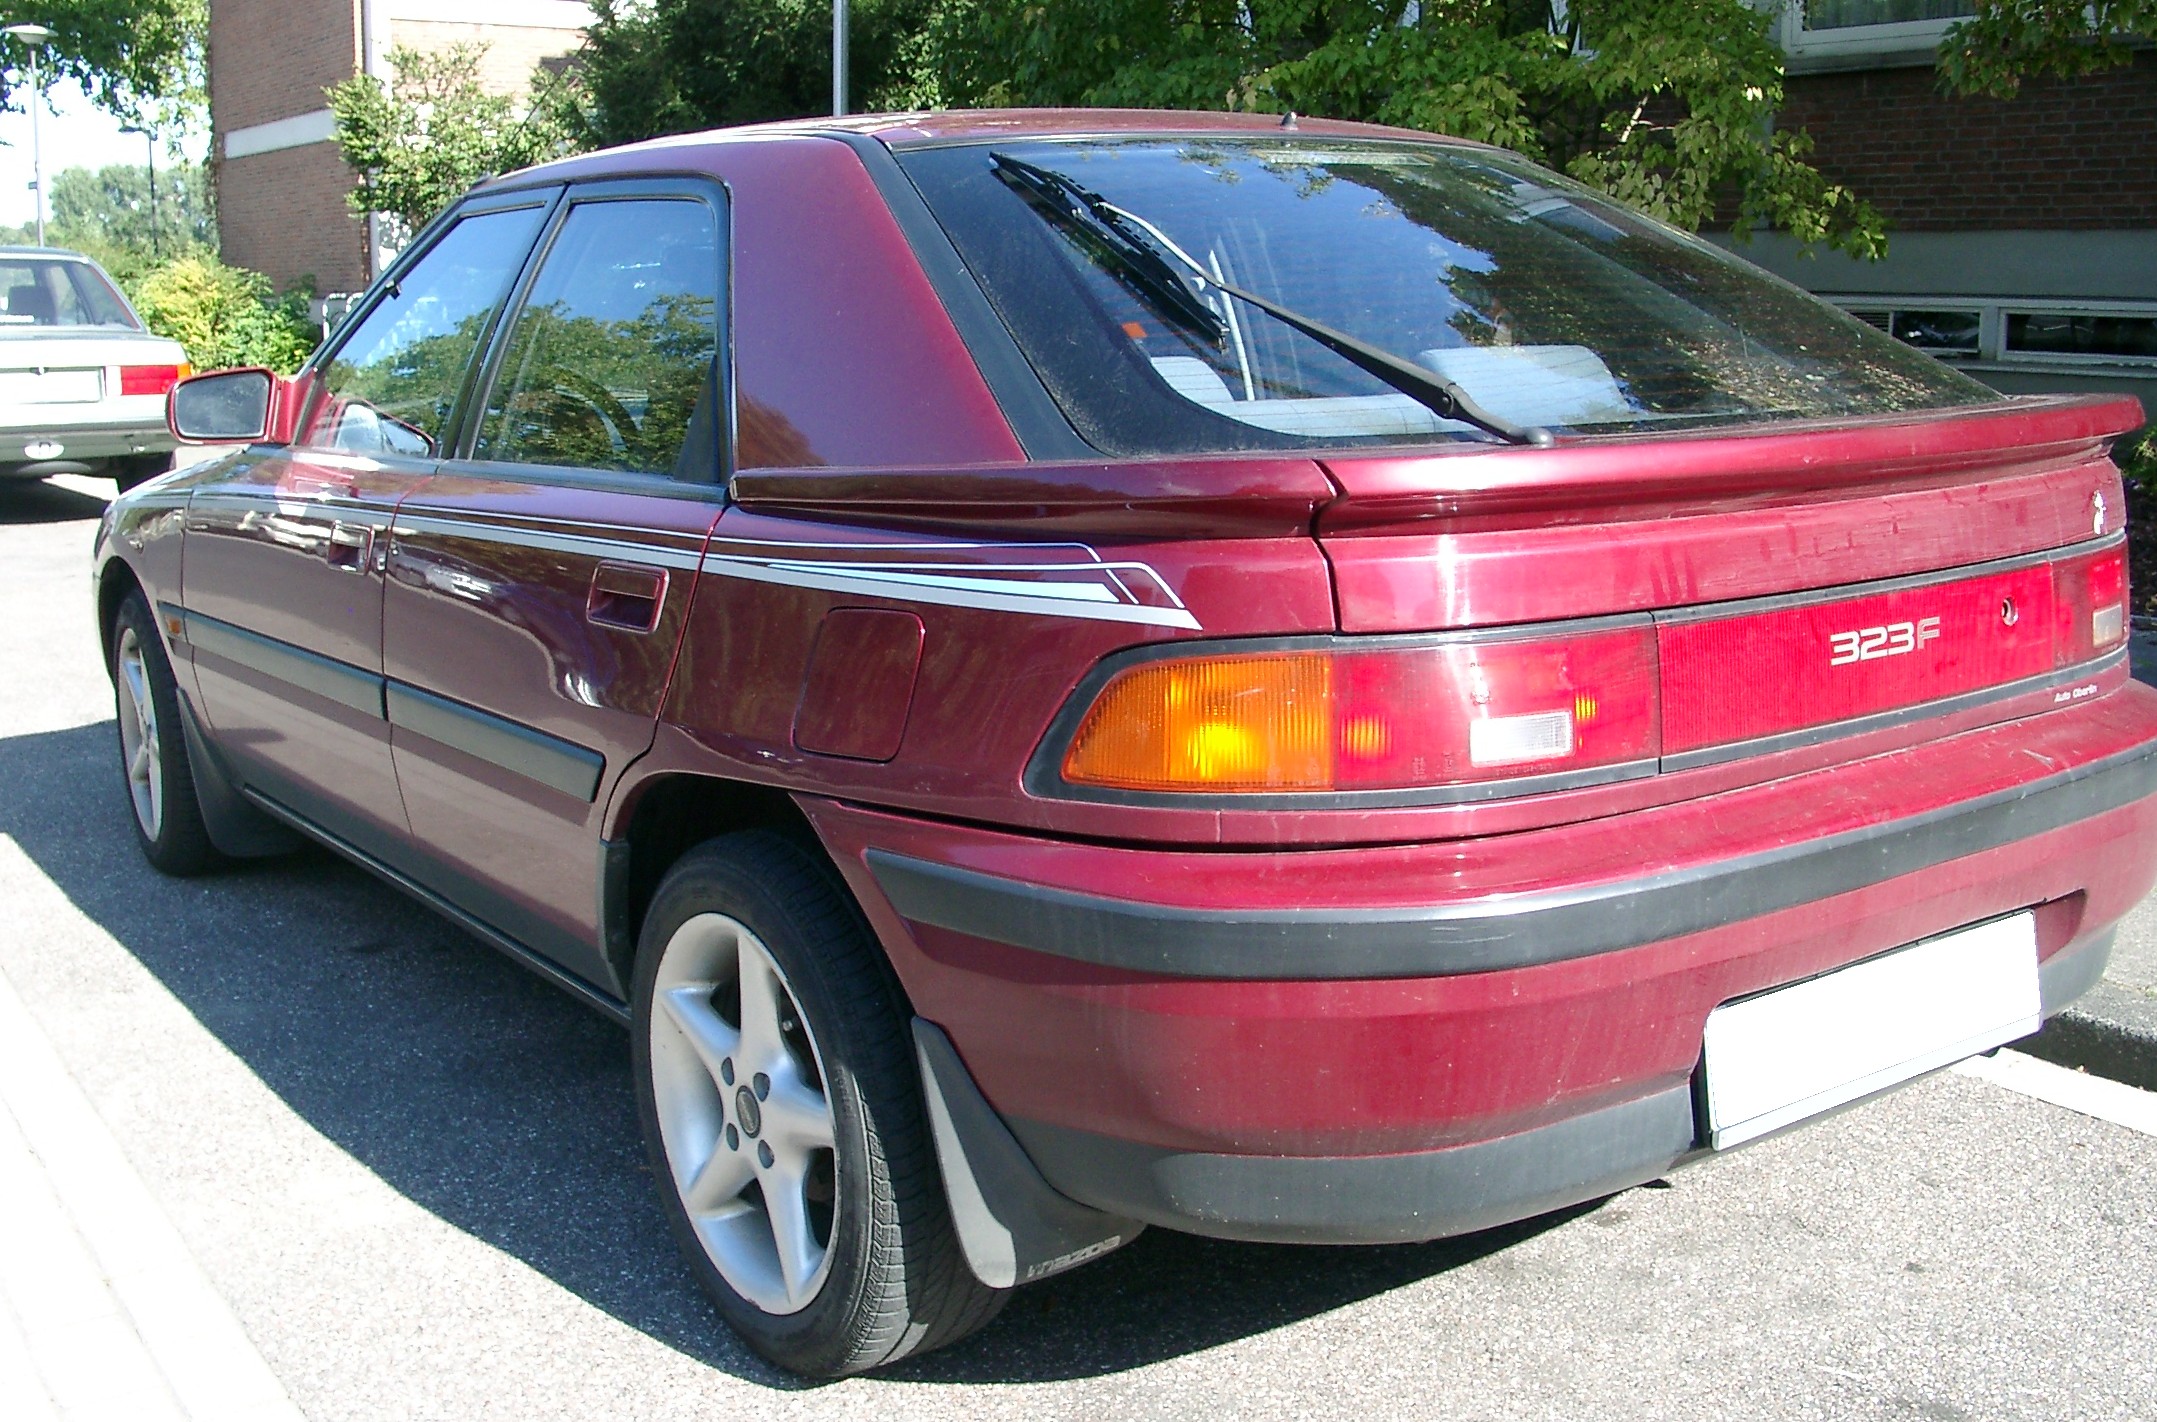 File:Mazda 323F rear 20070801.jpg - Wikimedia Commons